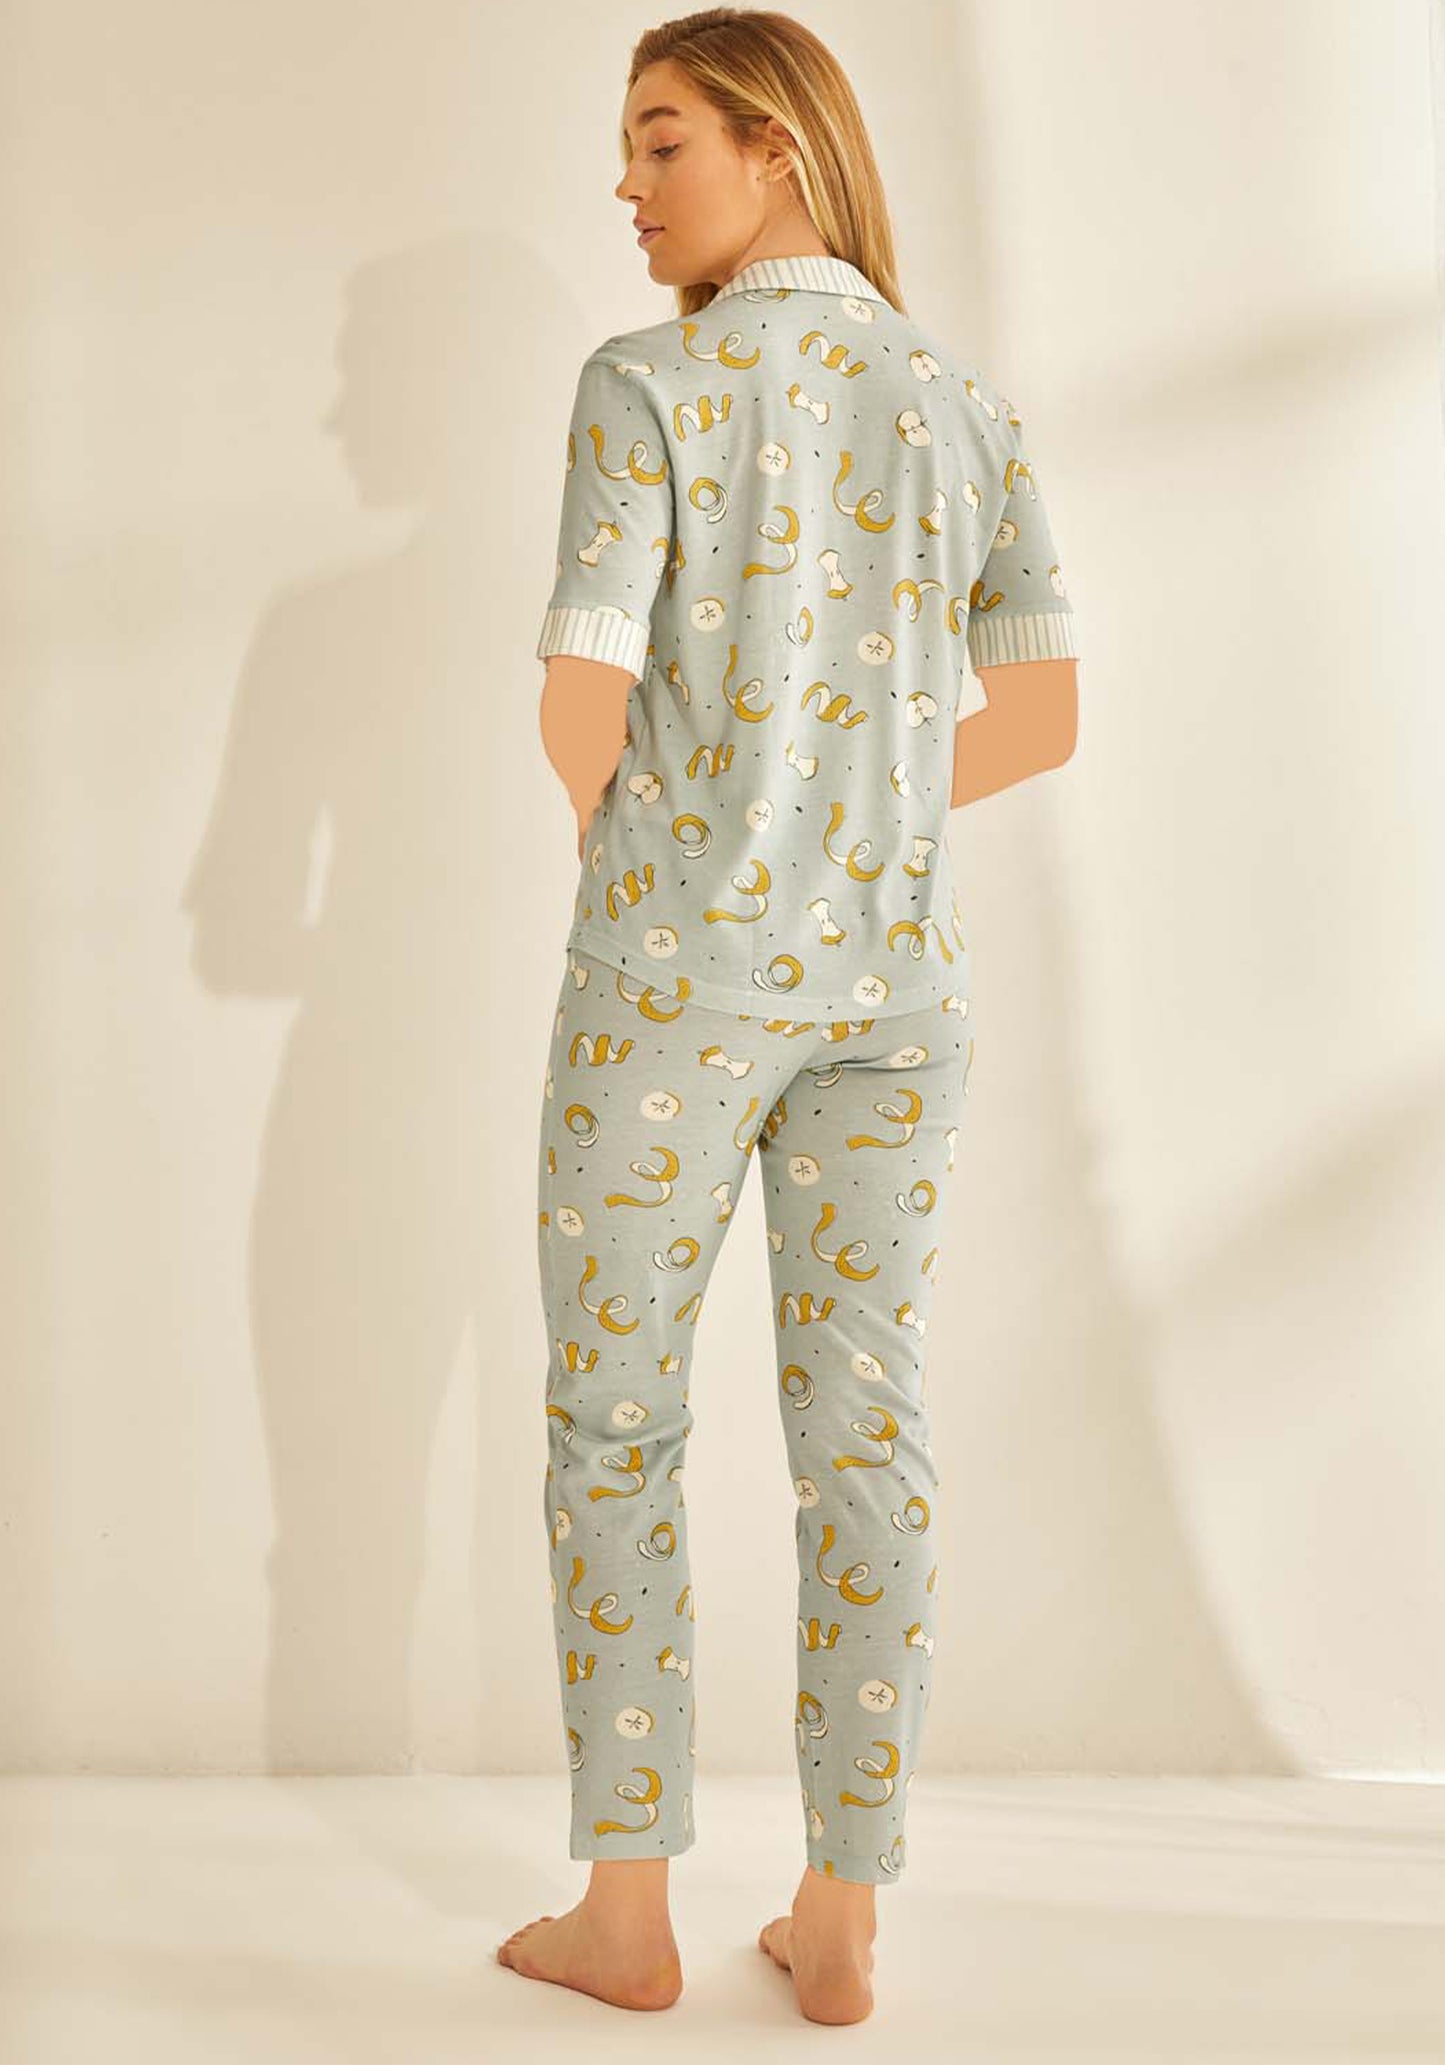 S&L Apple Collar Button Pajama